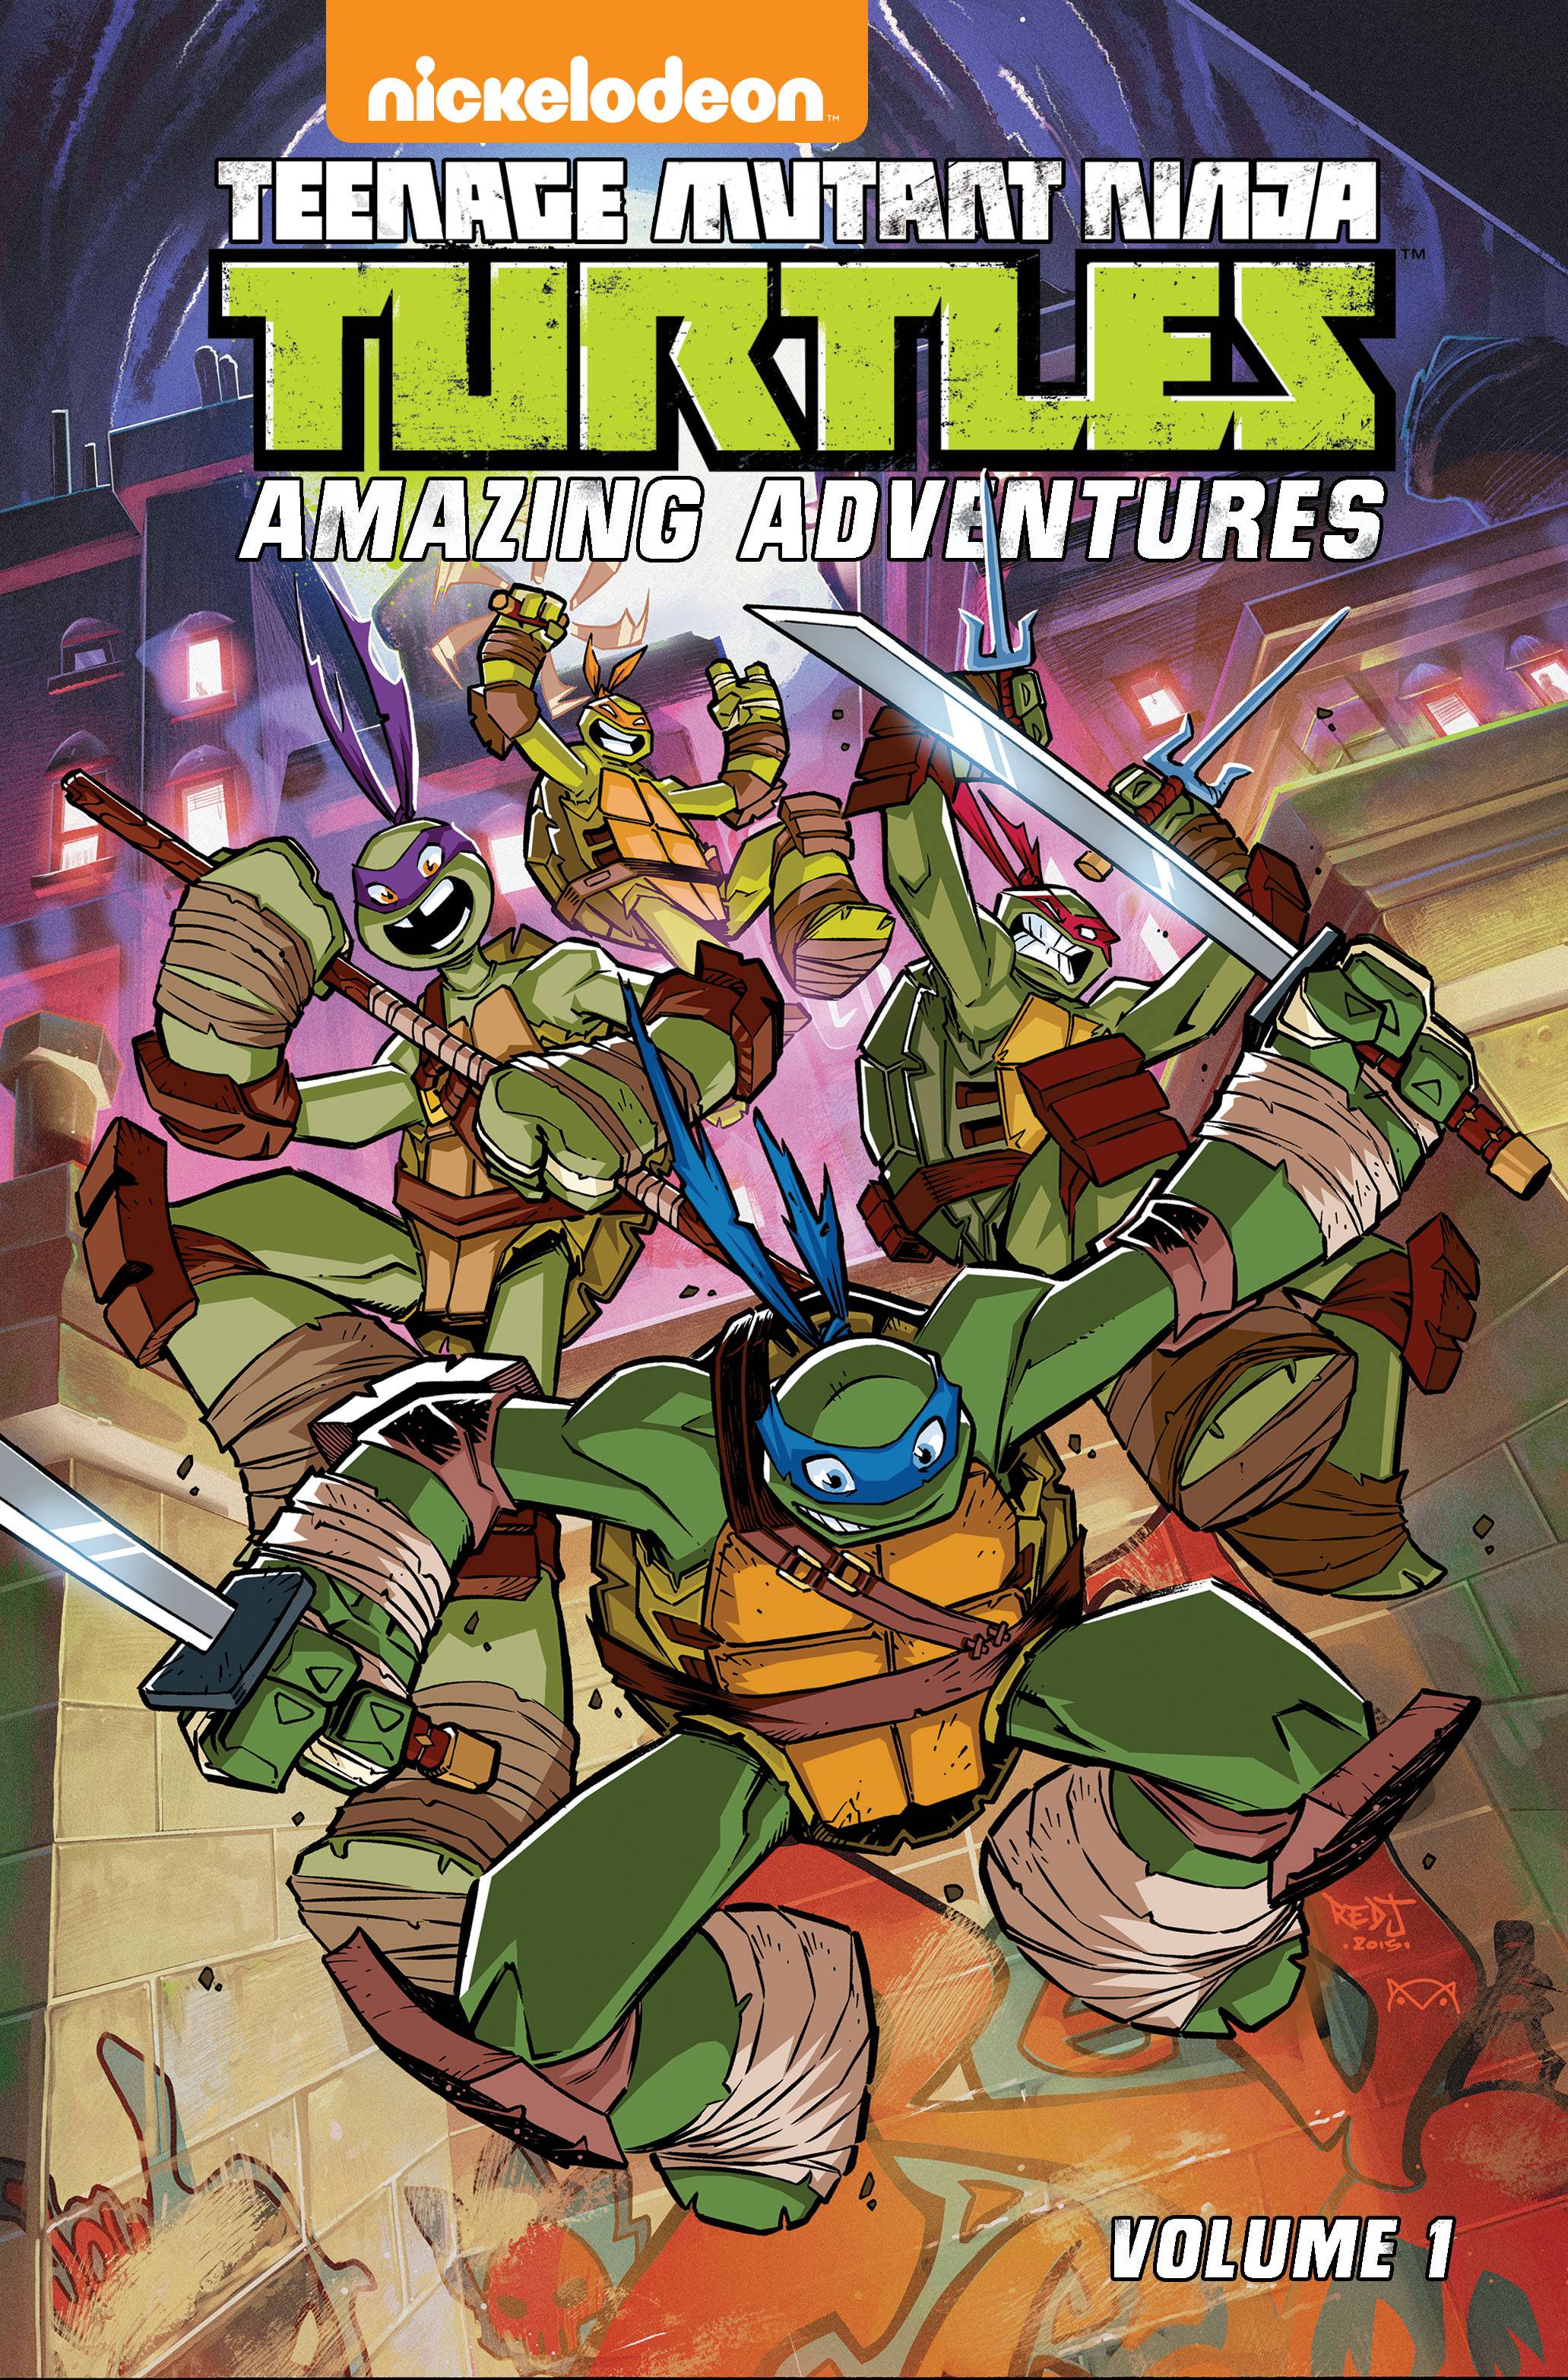 Teenage Mutant Ninja Turtles Amazing Adventures Graphic Novel Volume 1